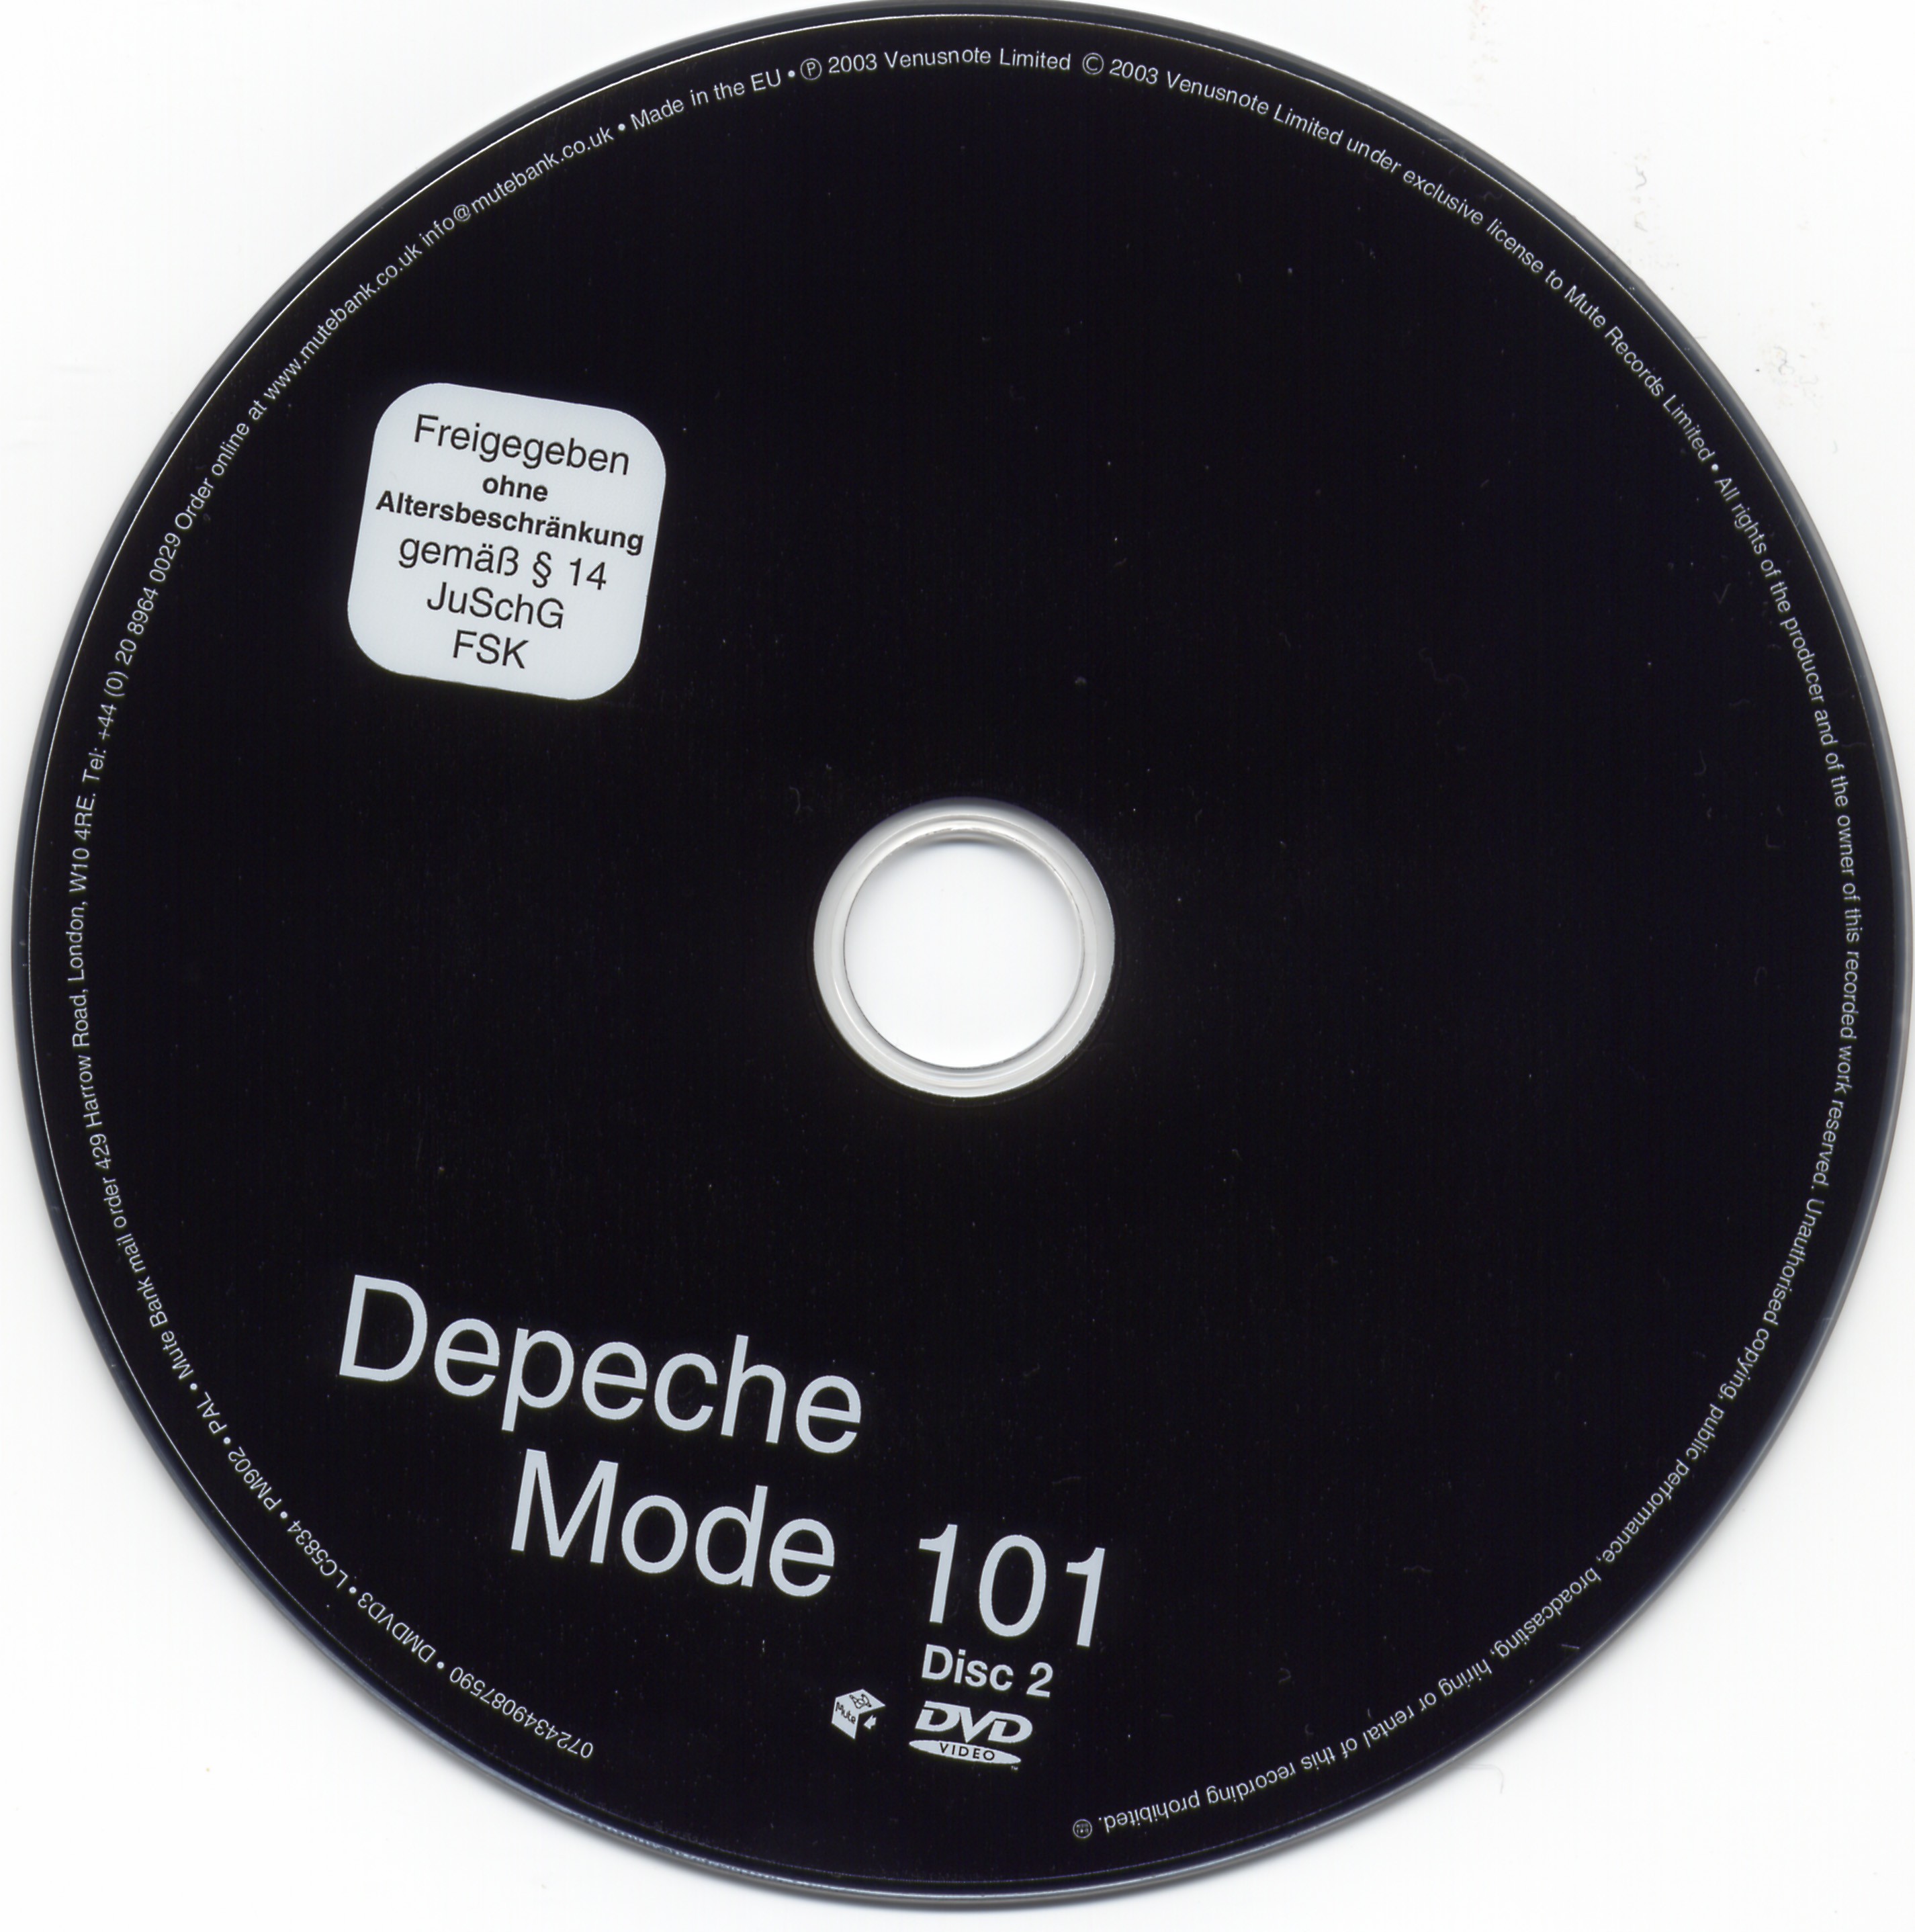 Depeche Mode Live 101 DISC 2